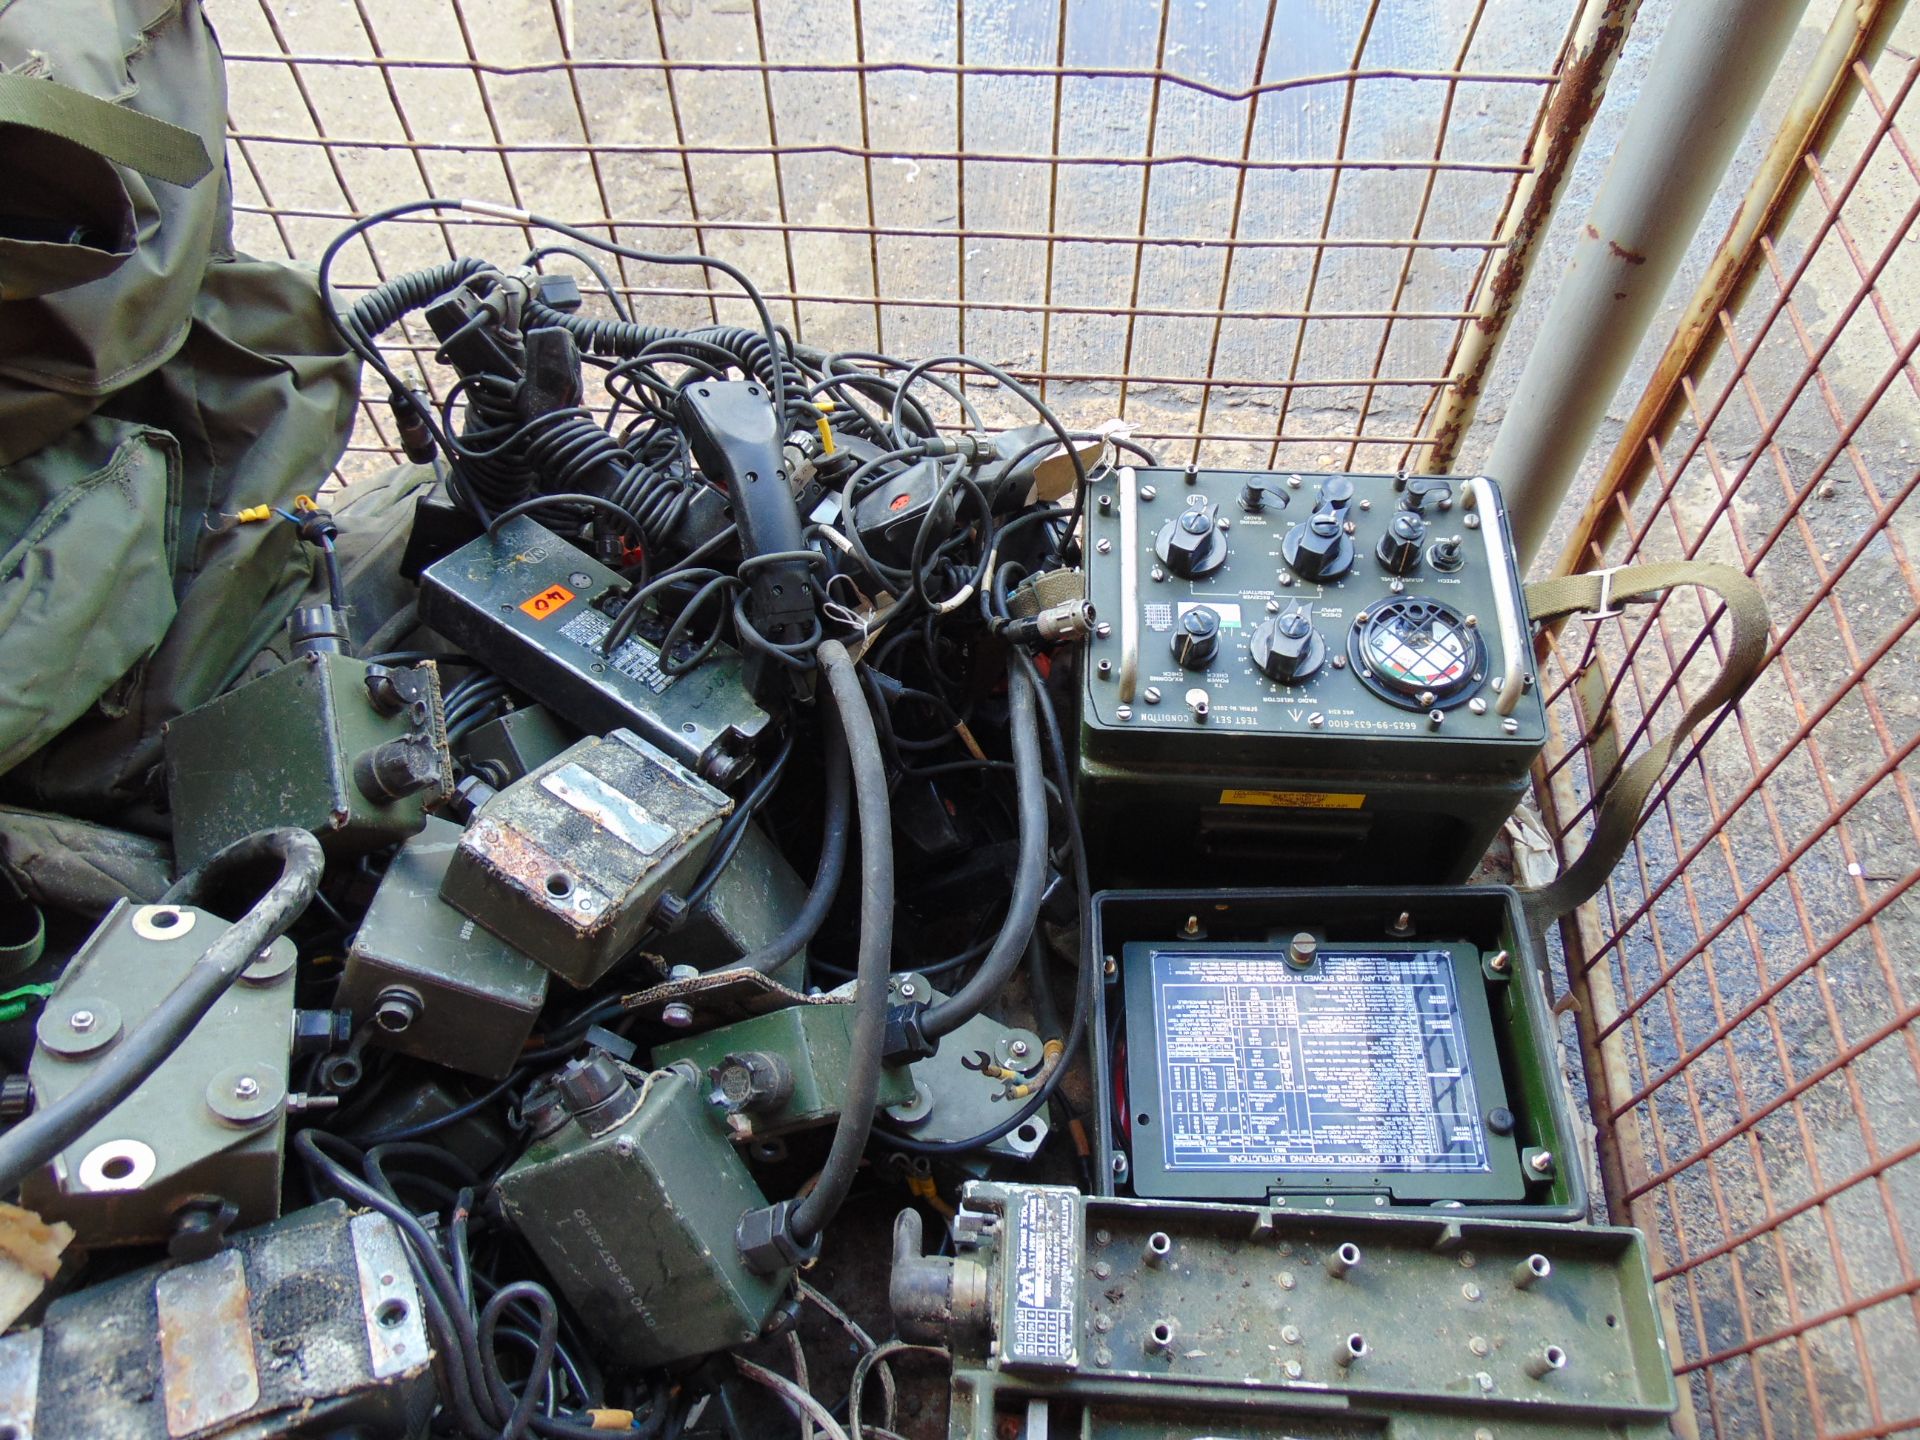 1 x Stillage of Clansman Radio Equipment inc Transmitter, Test Sets, Charger, Cables, Handsets etc - Image 3 of 12